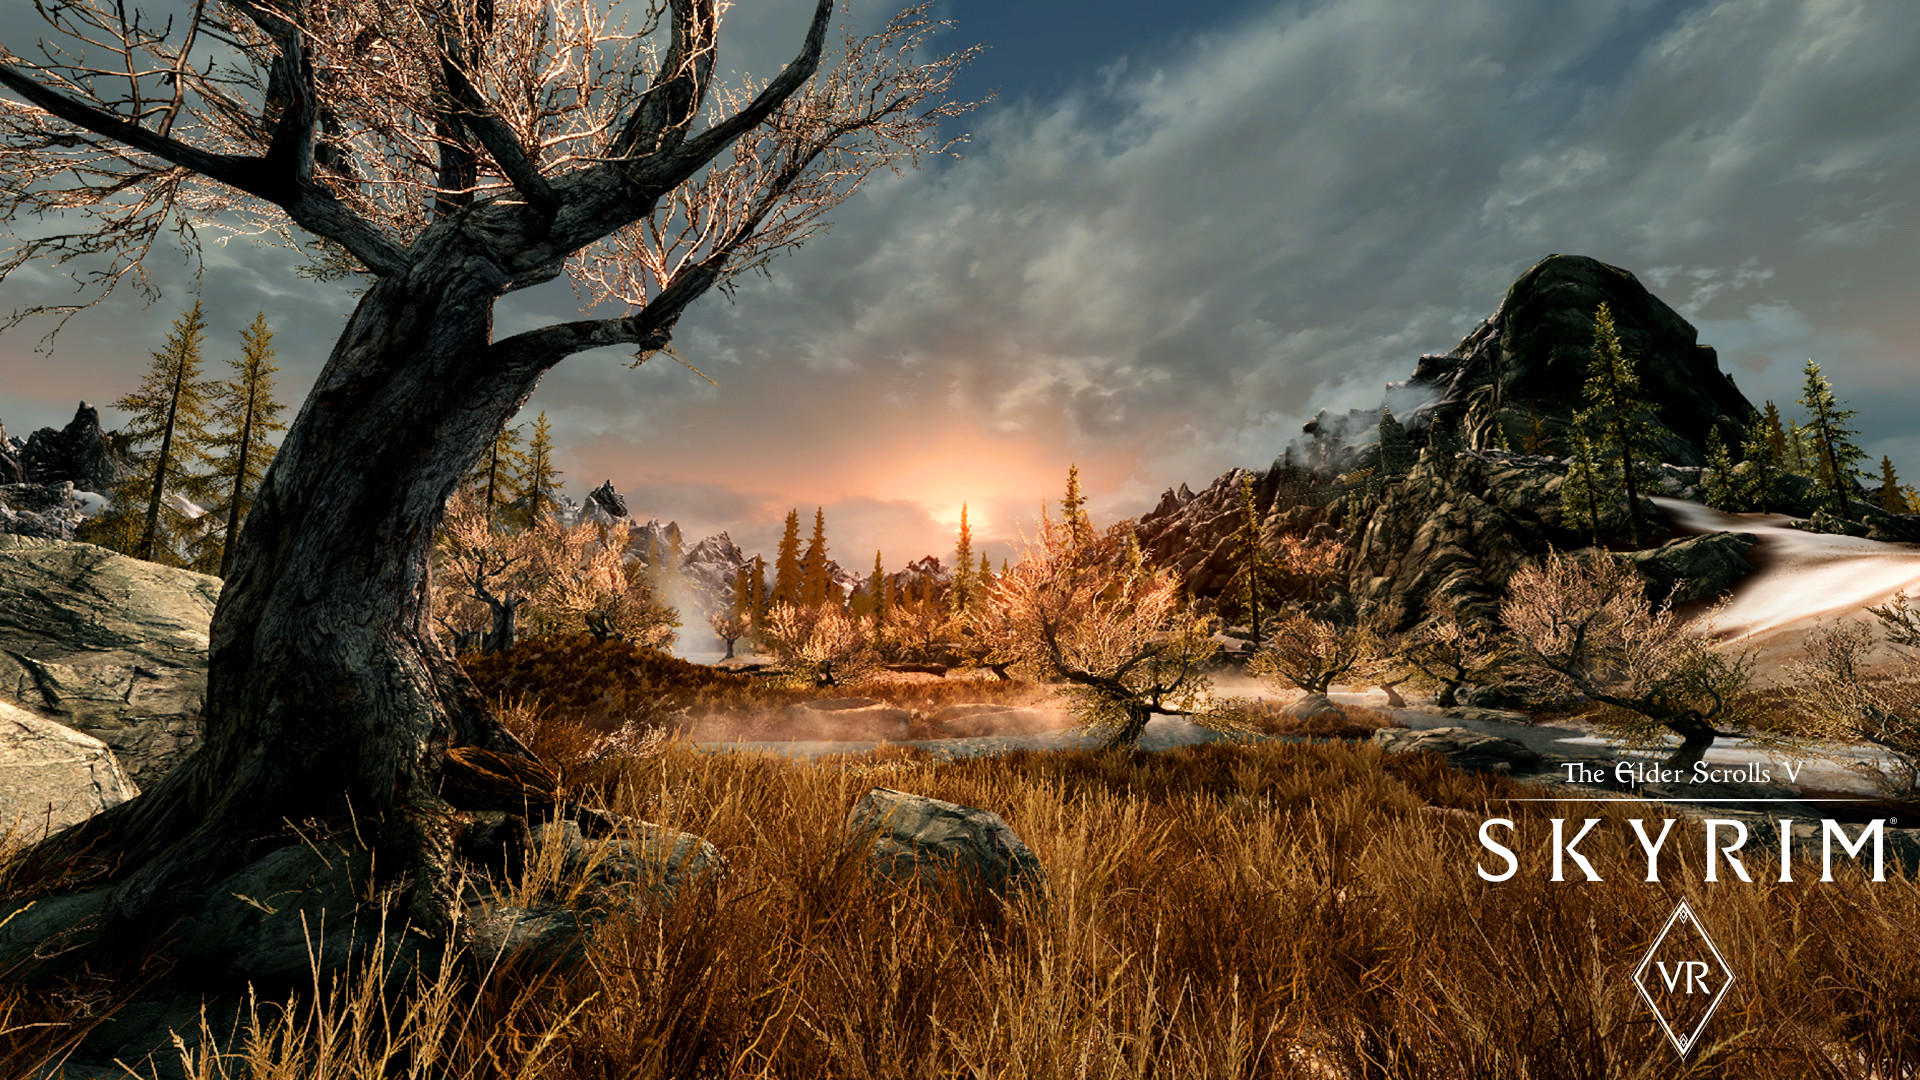 Screenshot 1 of The Elder Scrolls V: Skyrim VR 